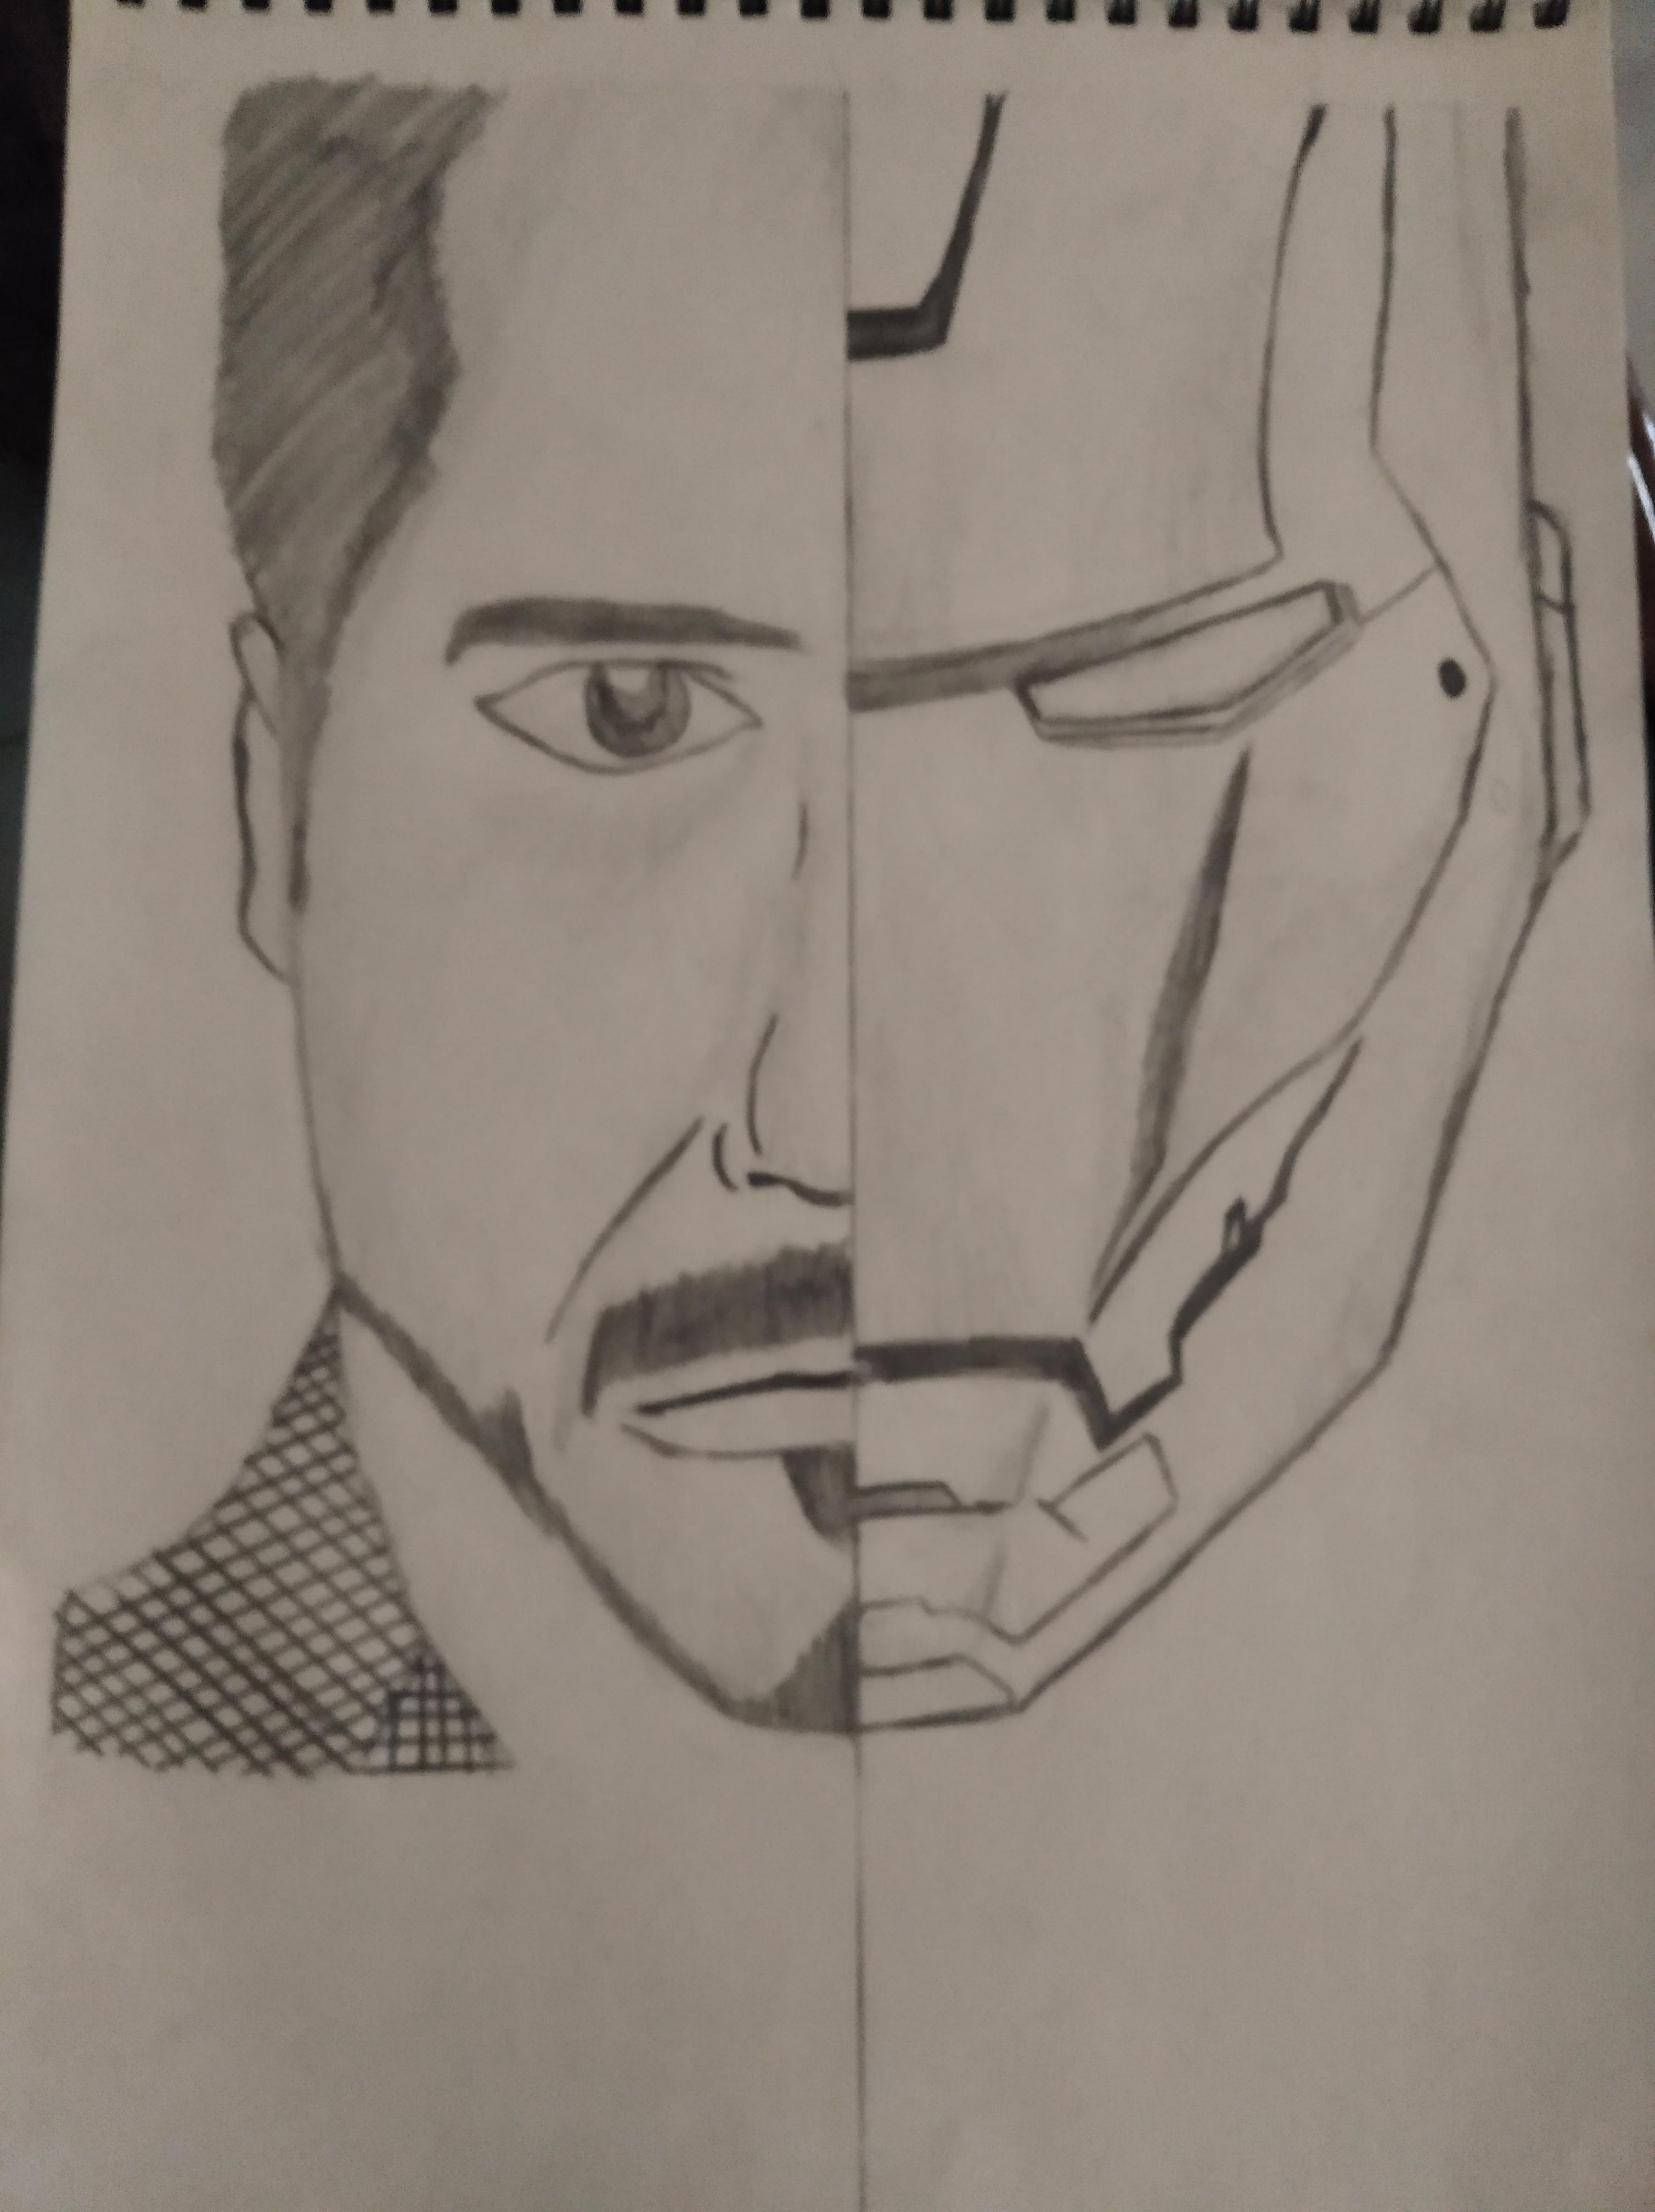 Tony Stark Drawing Beautiful Image